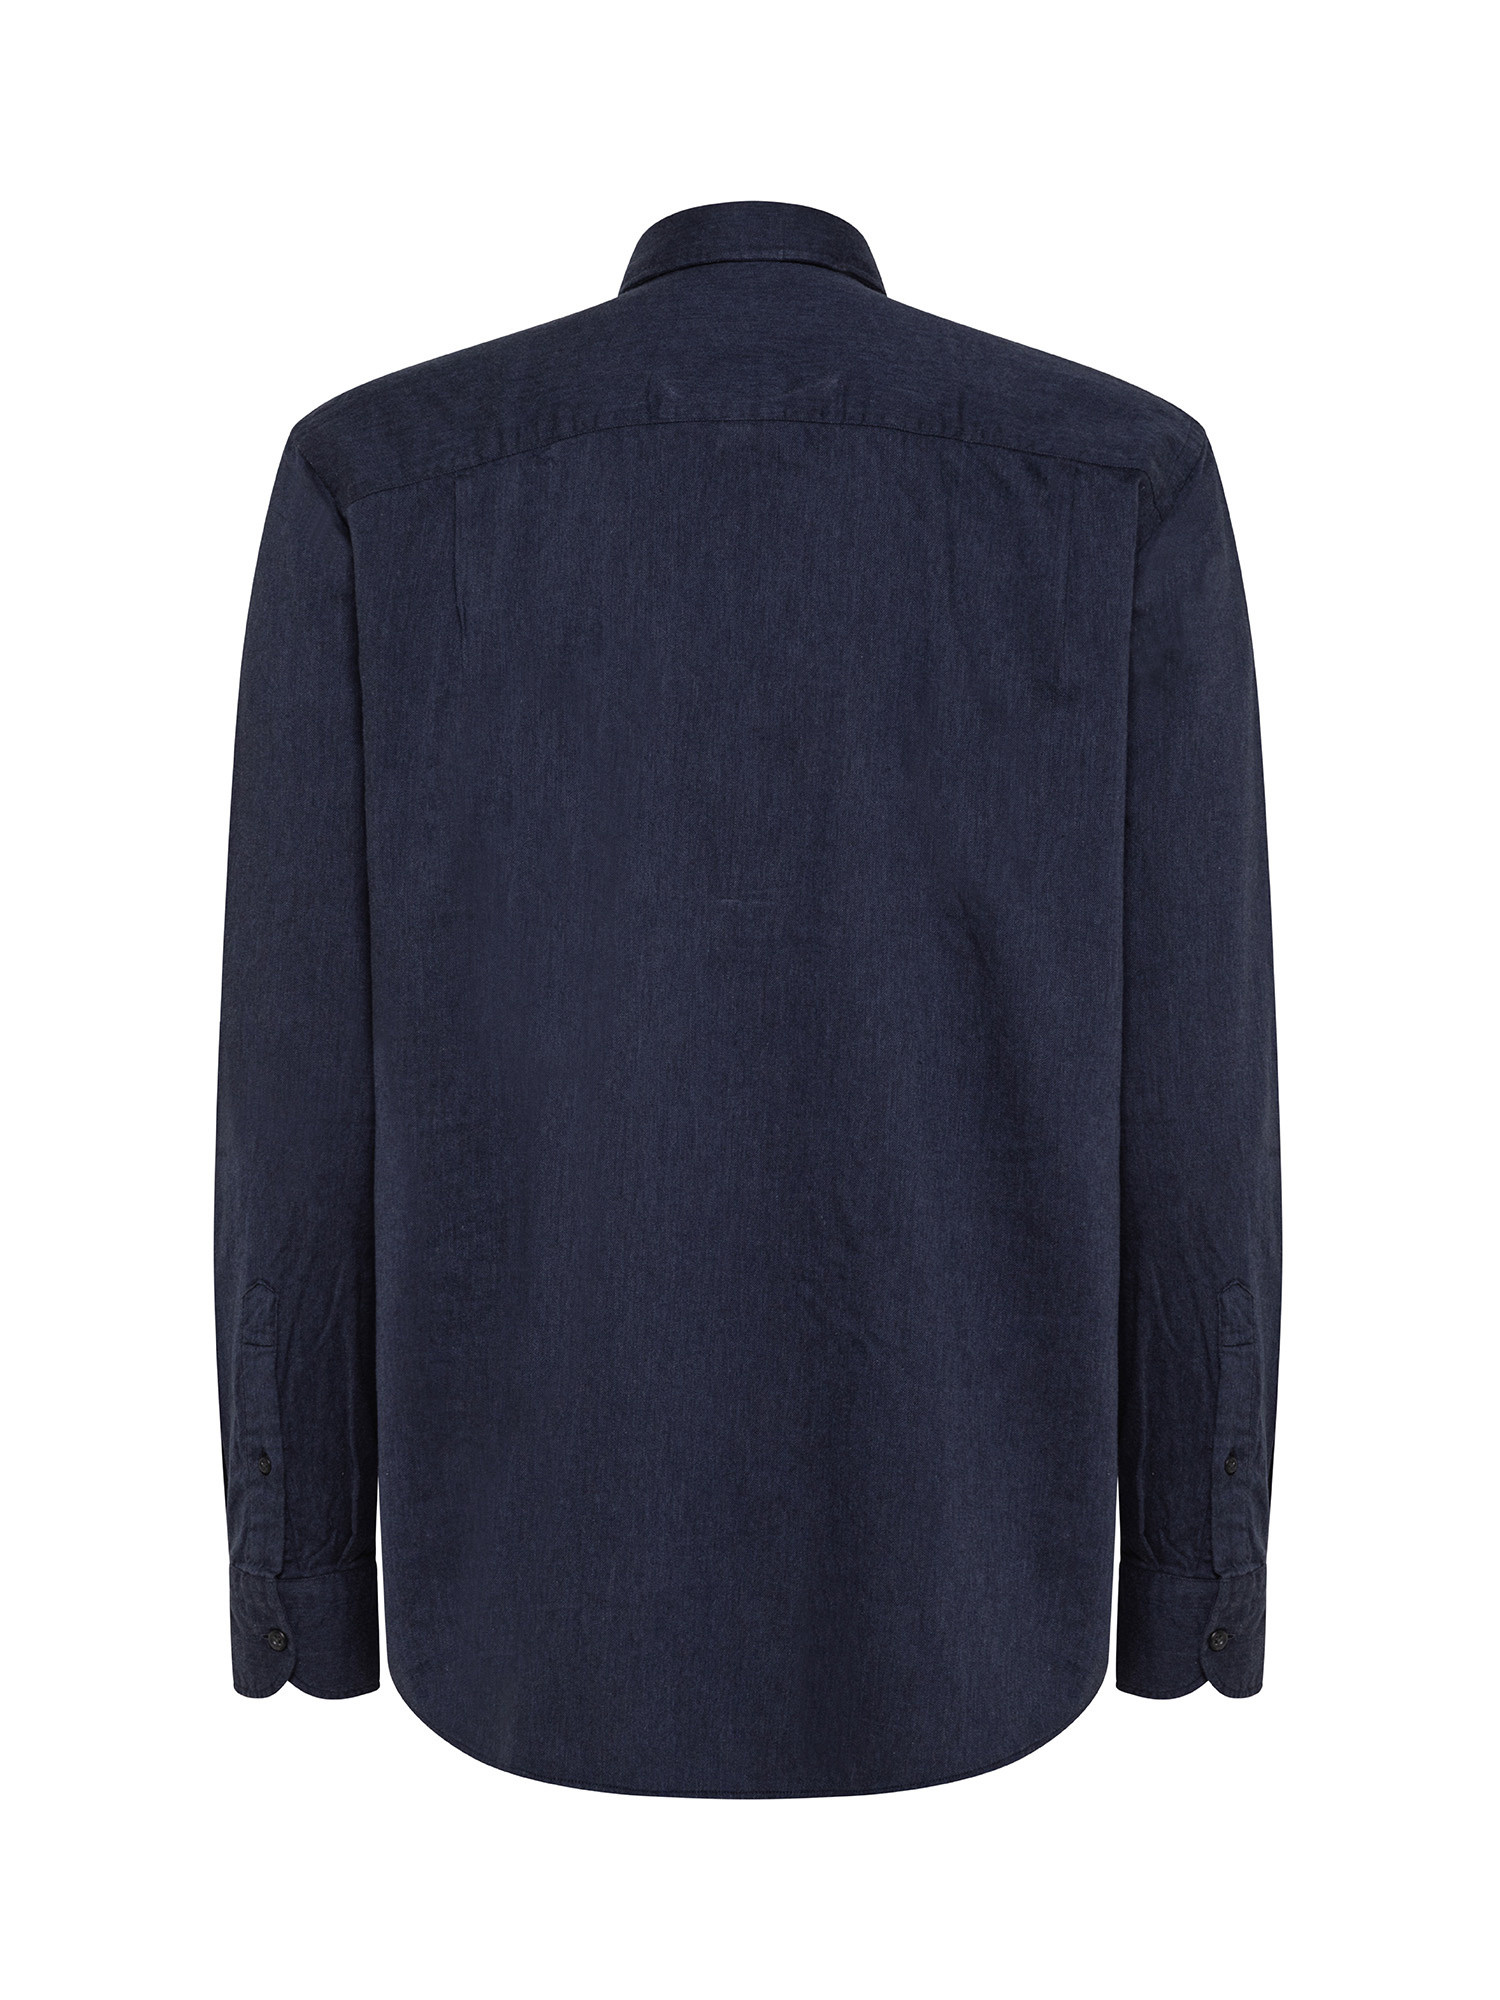 Regular fit shirt in soft organic cotton flannel, Dark Blue, large image number 1